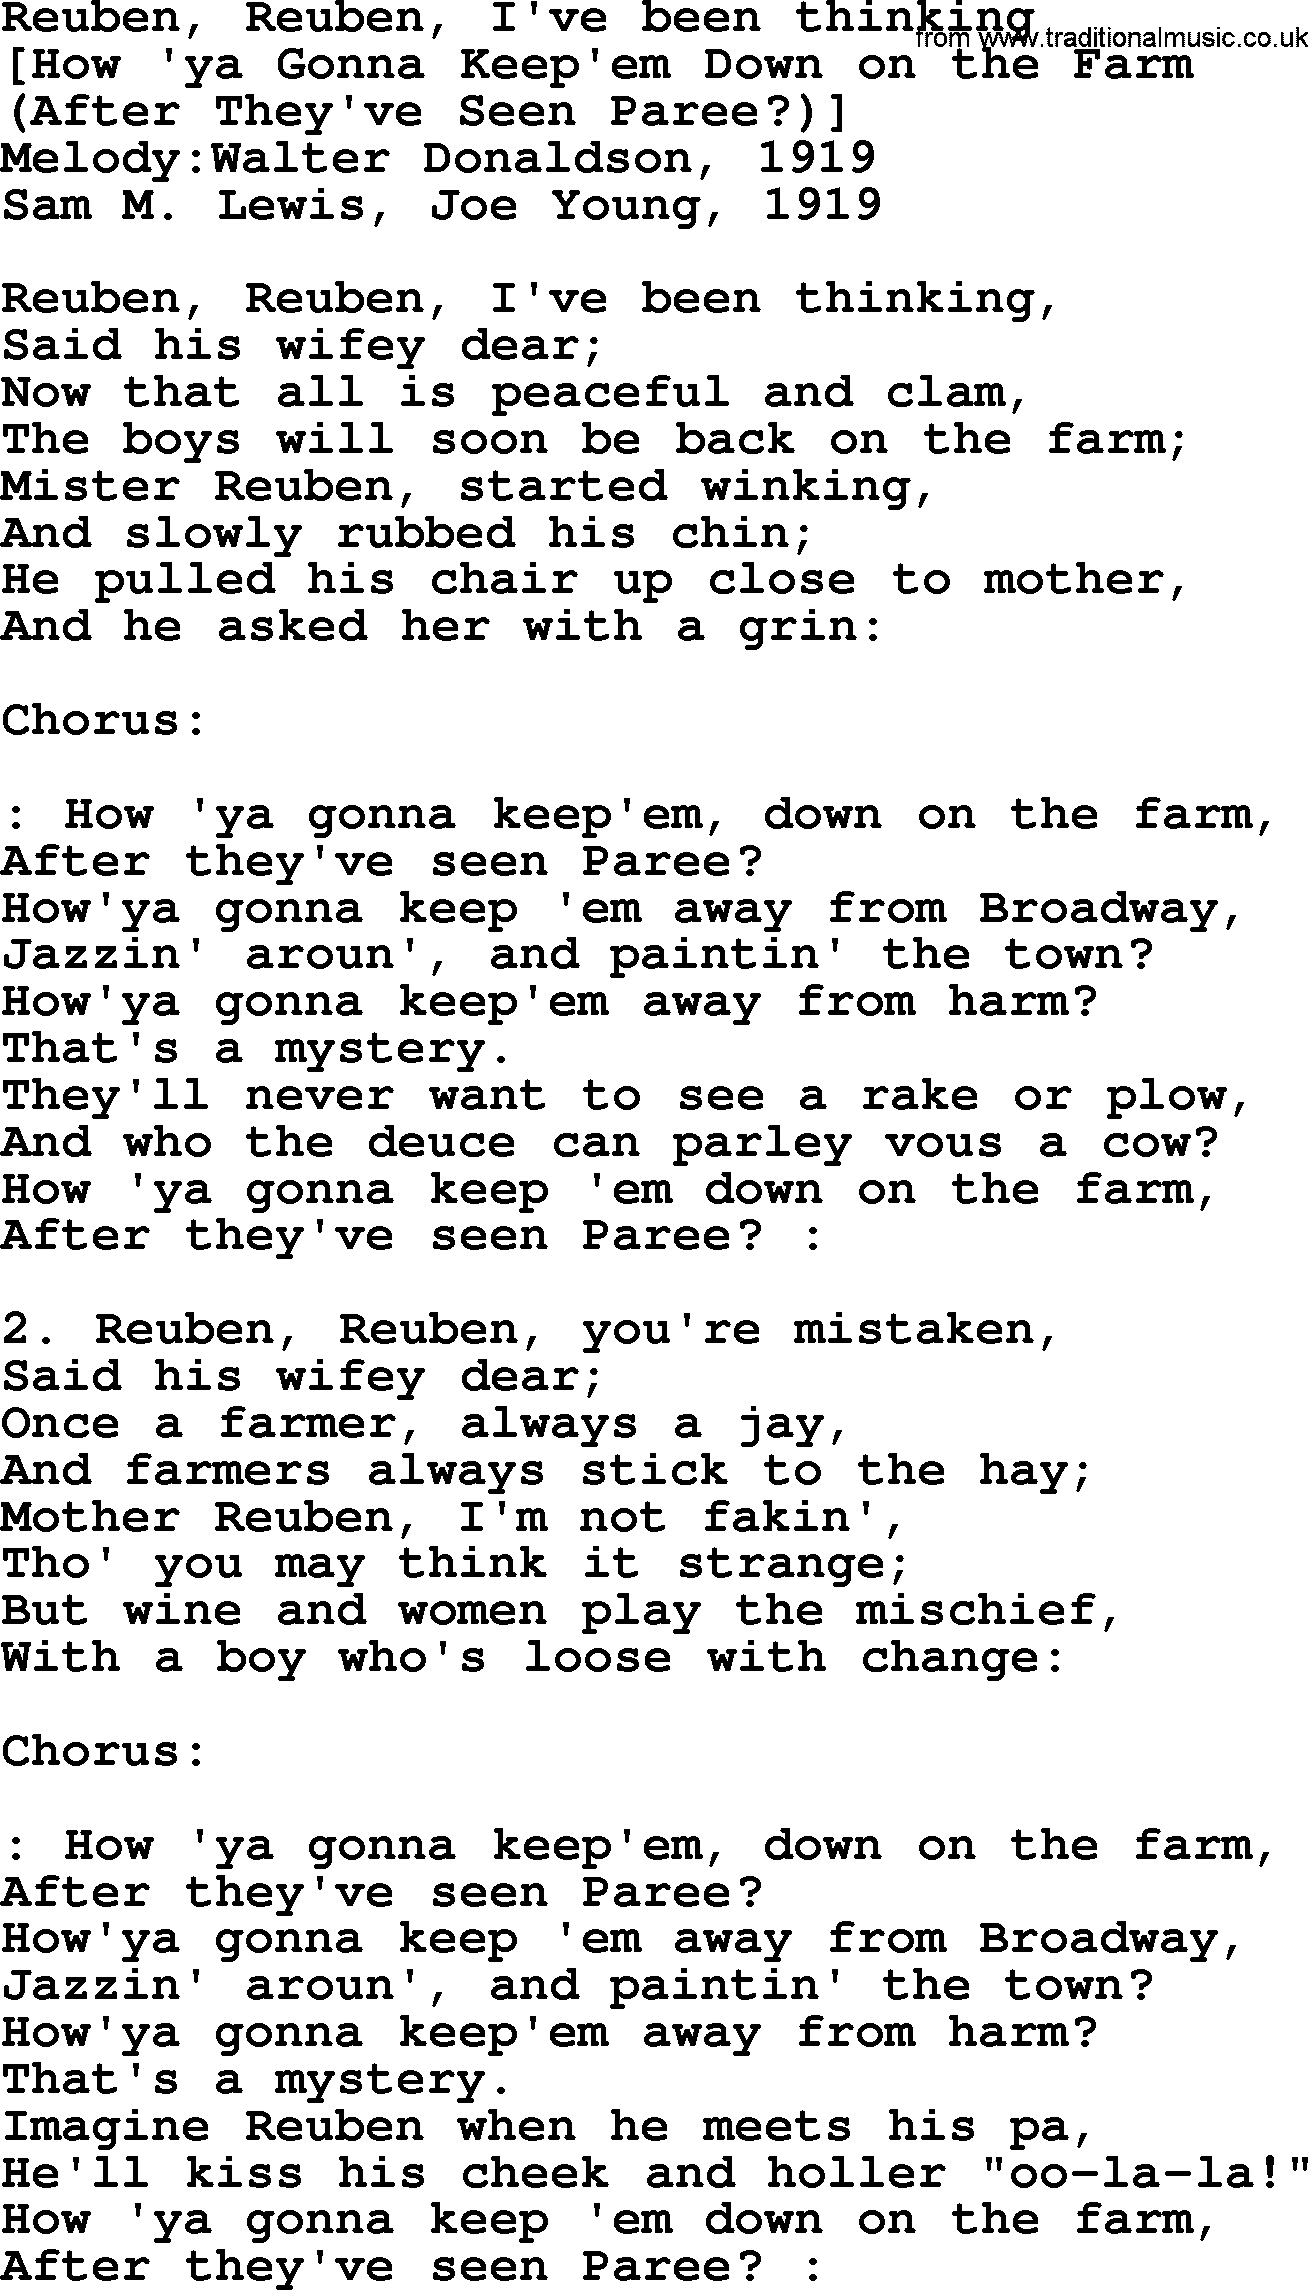 Old American Song: Reuben, Reuben, I've Been Thinking, lyrics